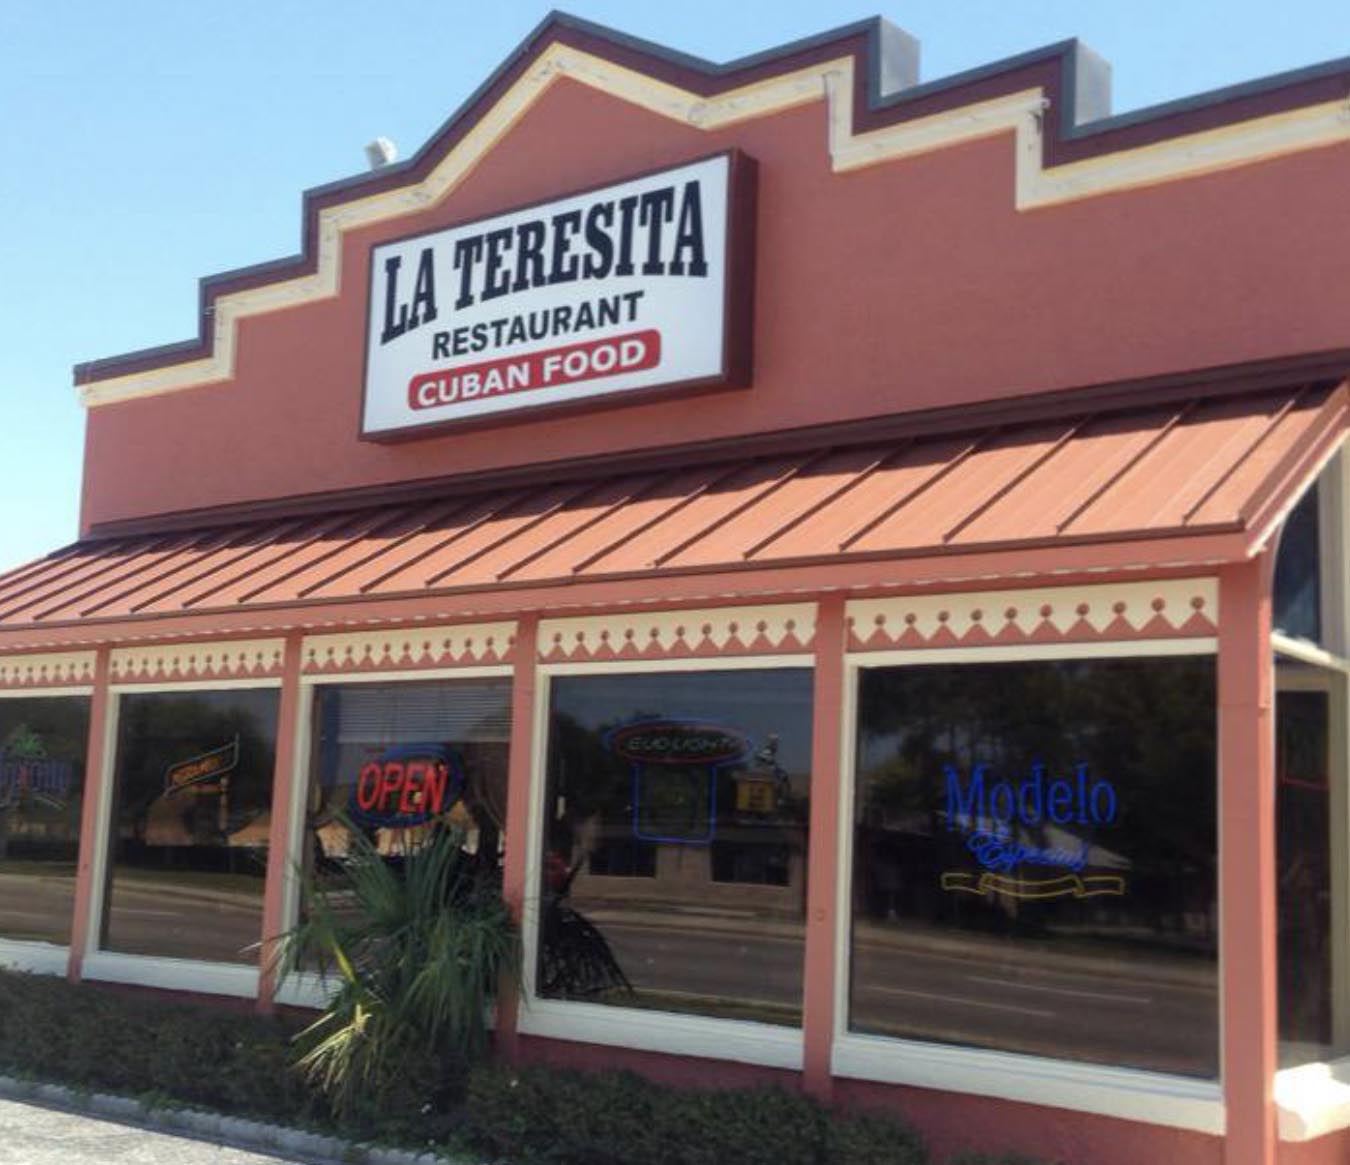 Where to Eat In Tampa Bay - La Teresita Restaurant